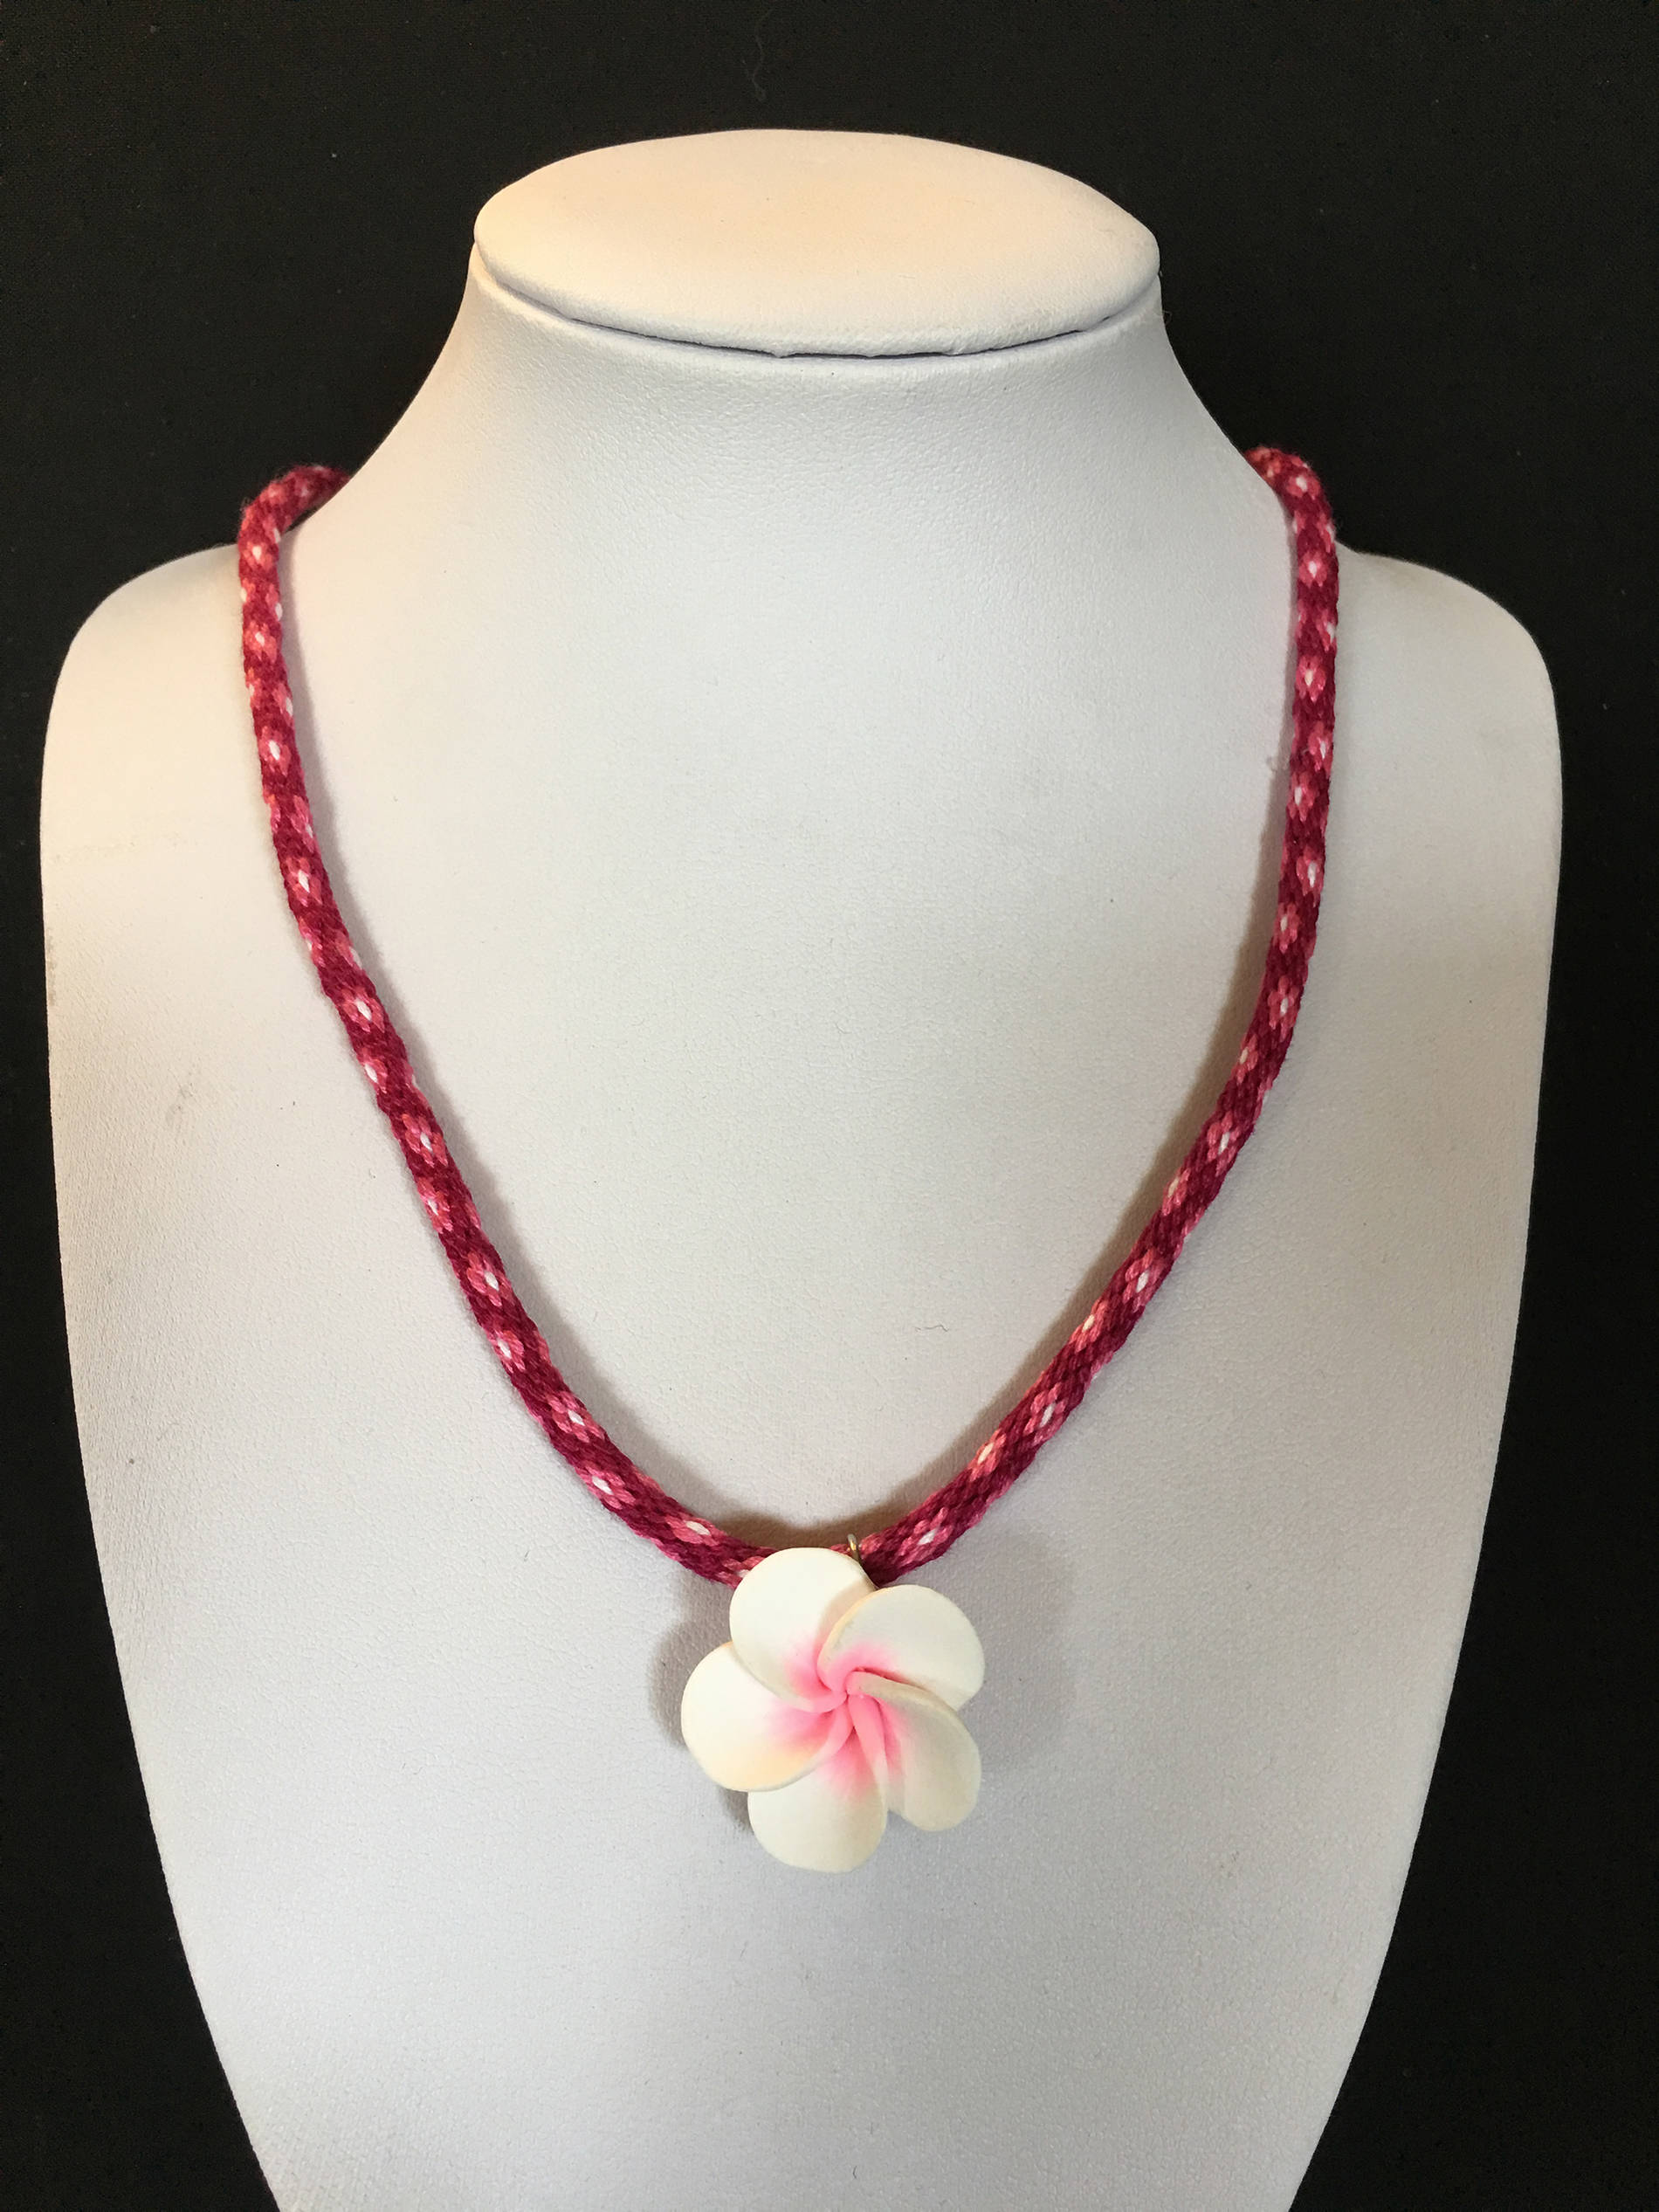 tahiti créa - Tahiti Iti créa - Rêv'claire - Collier tressé art japonais Kumihimo fleur fimo blanche coeur rose - coton DMC